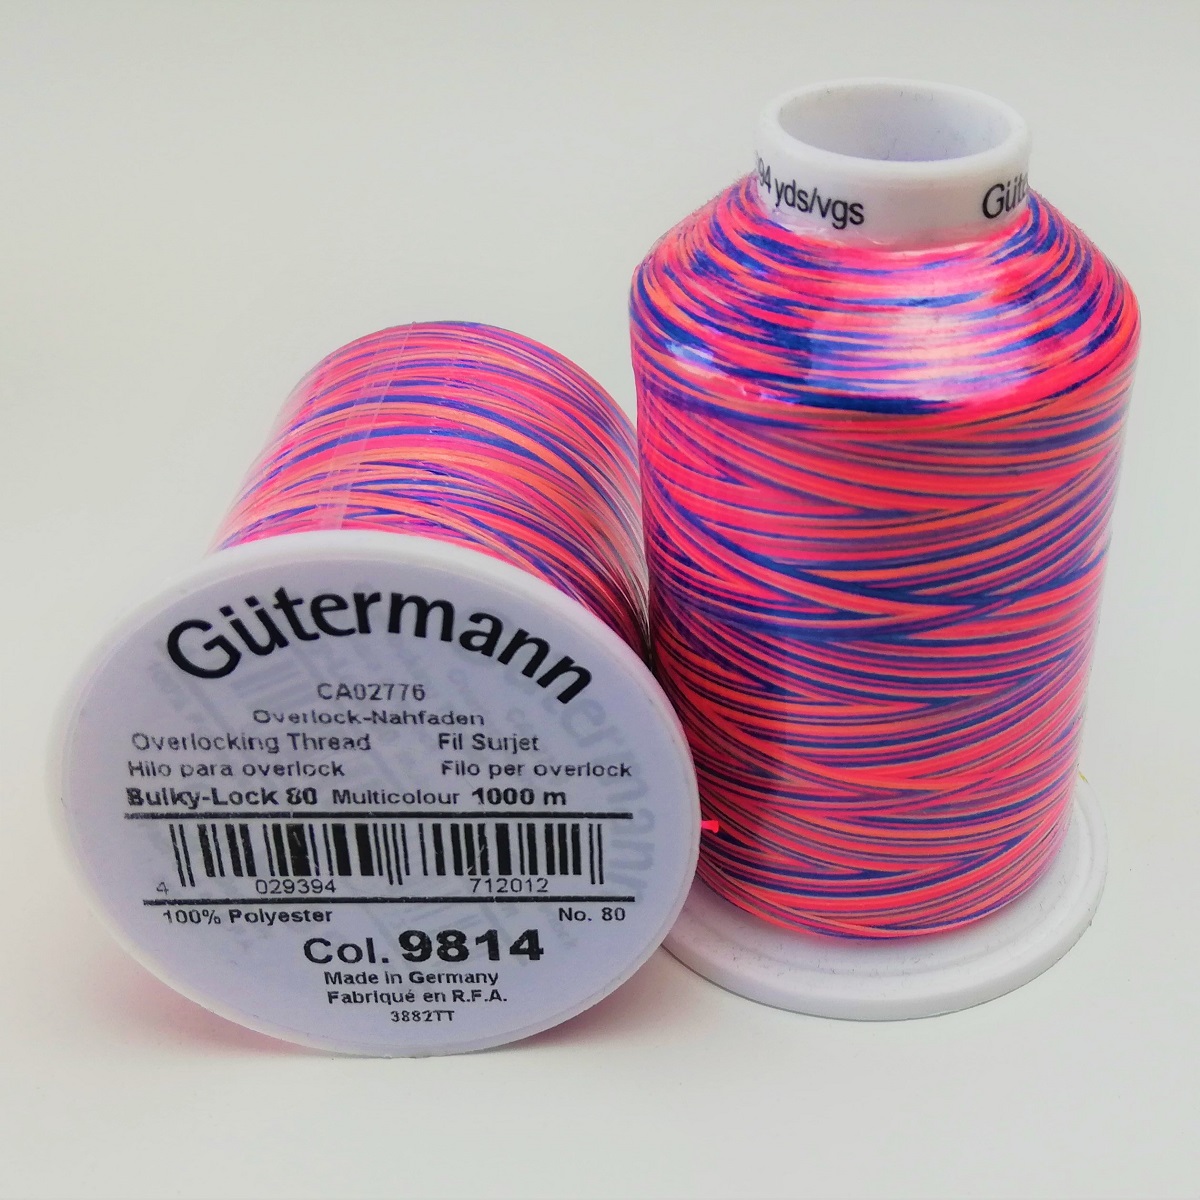 Gütermann Bauschgarn Bulky-Lock 80 Multicolor pink jeans 9814, 1000m